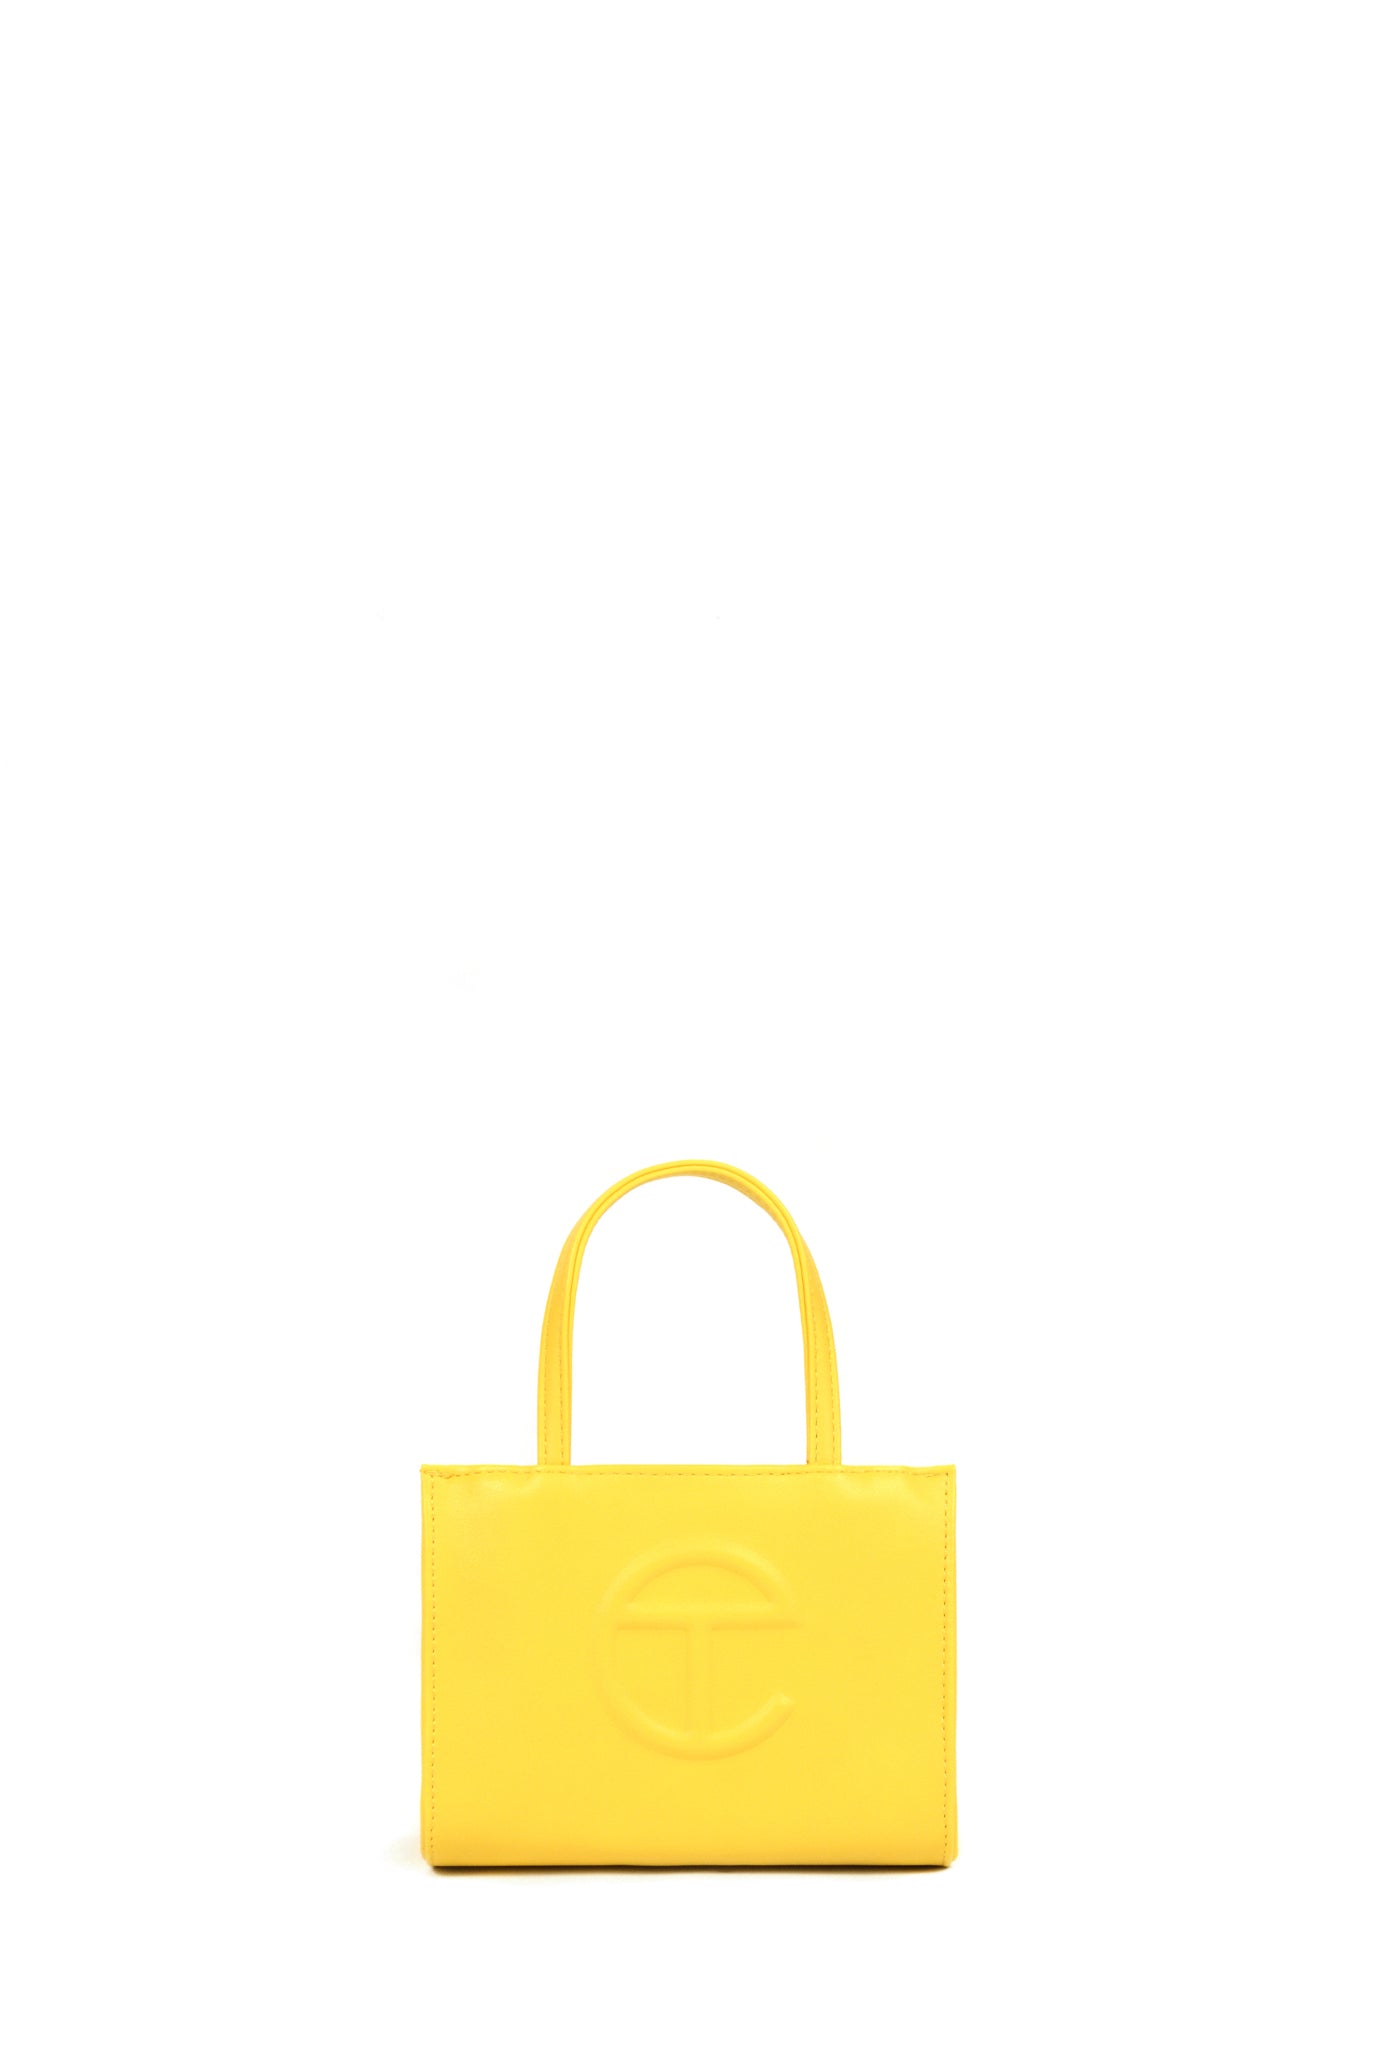 Telfar Small Shopping Bag, Yellow